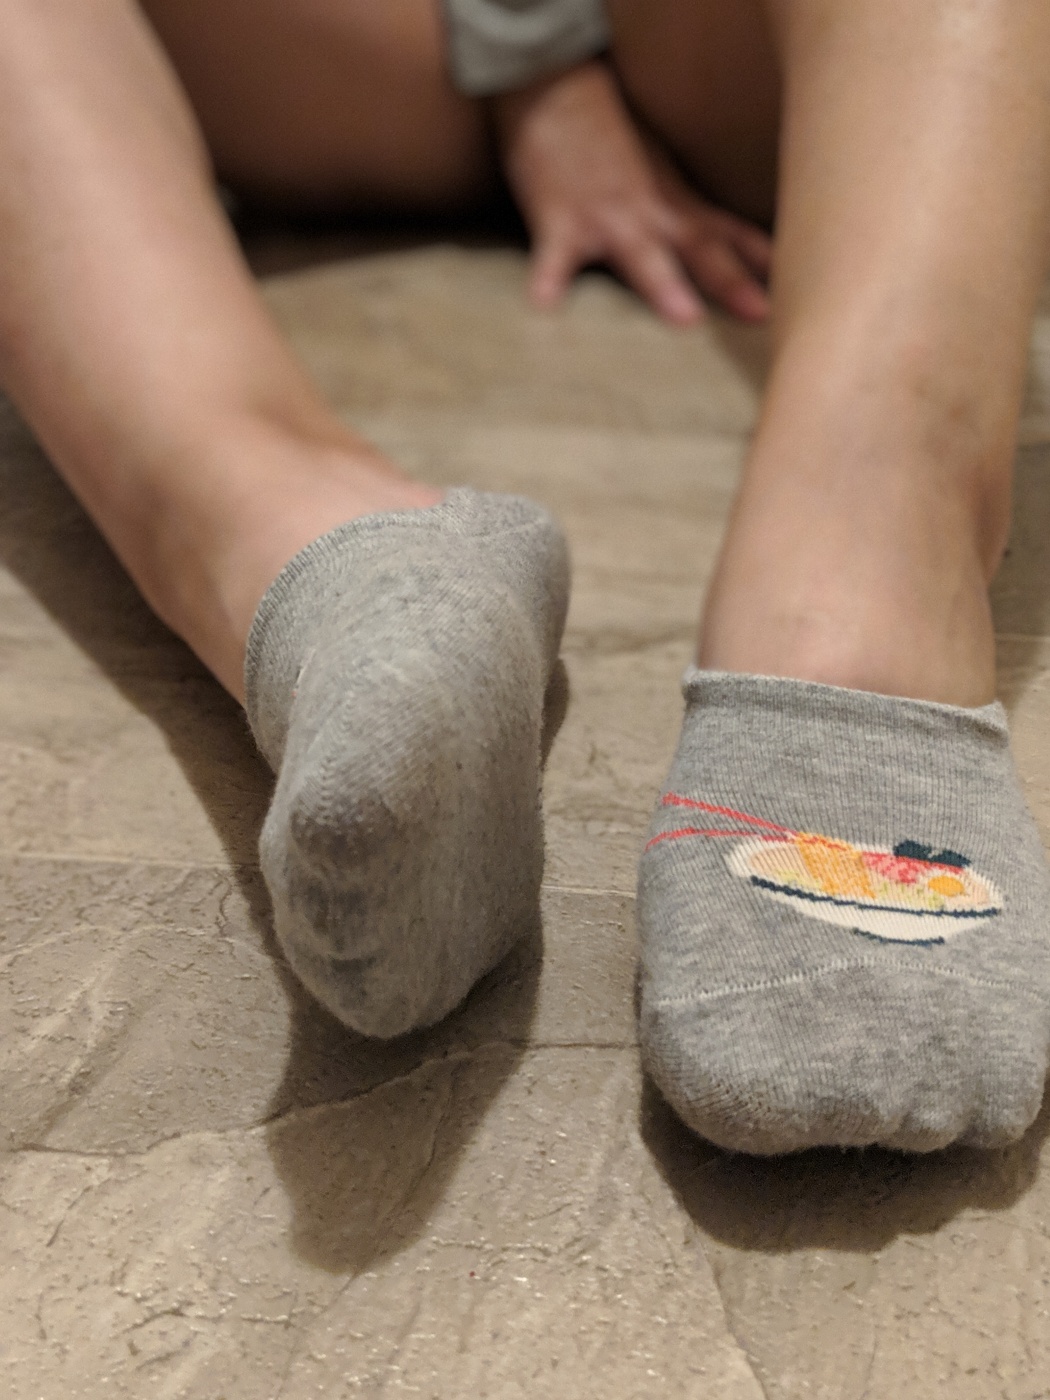 Worn socks with design